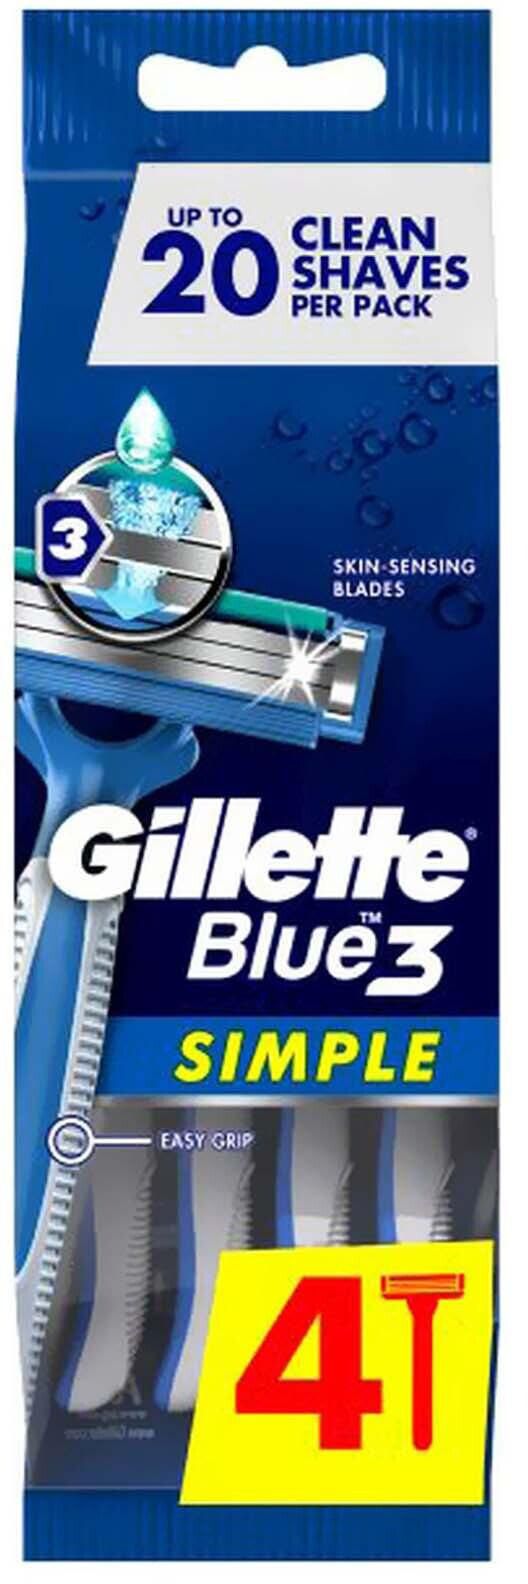 Gillette blue3 disposable razor x4